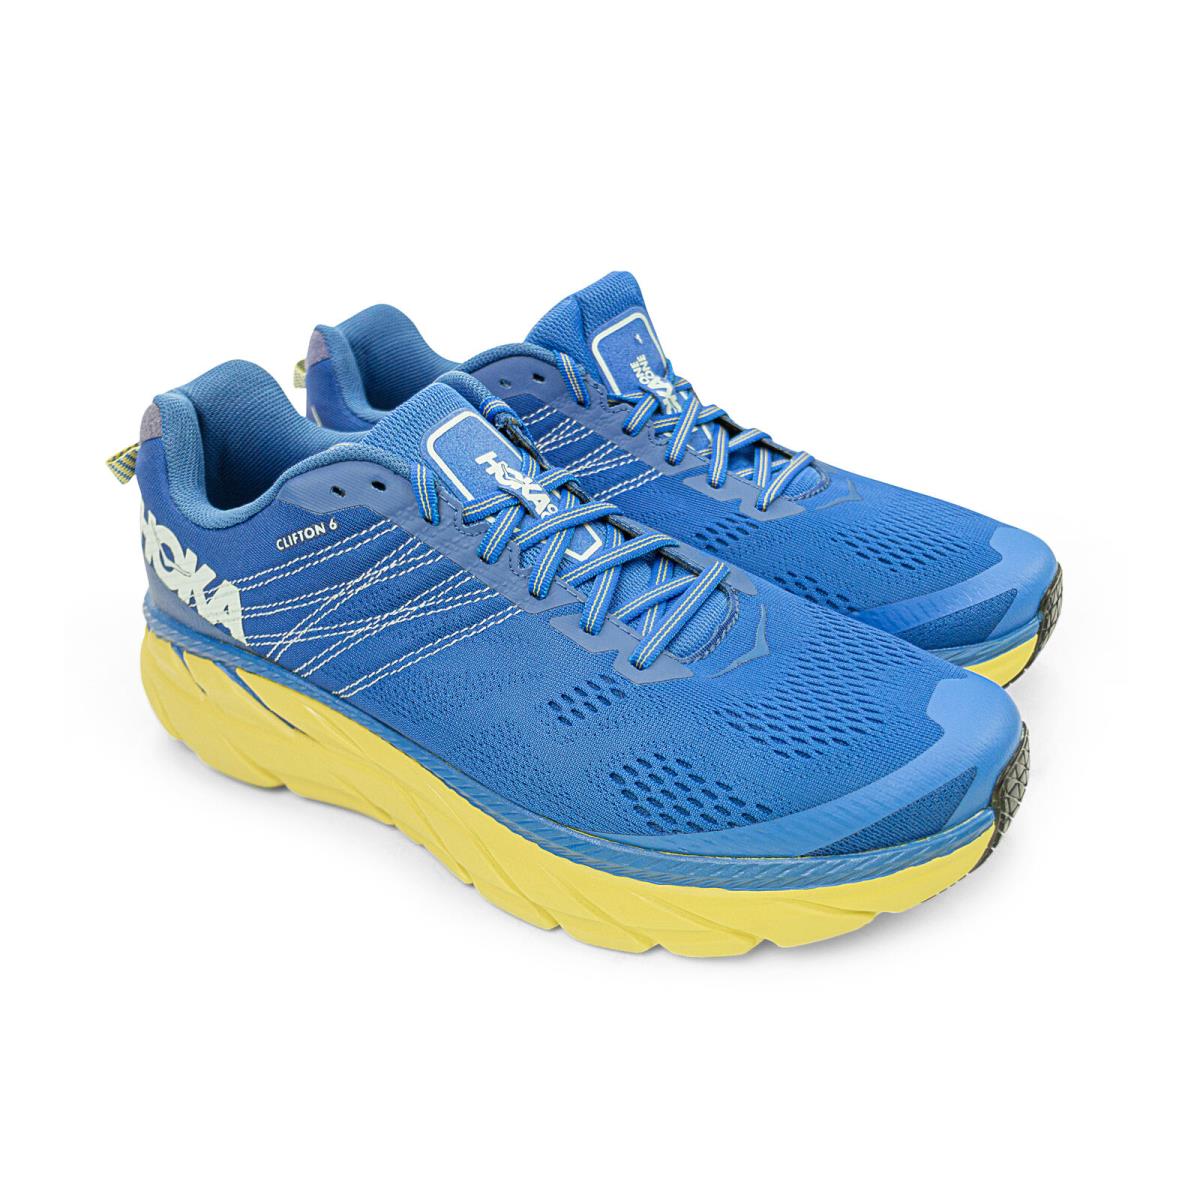 Hoka One One Blue/yellow Clifton 6 Sneaker Size 12